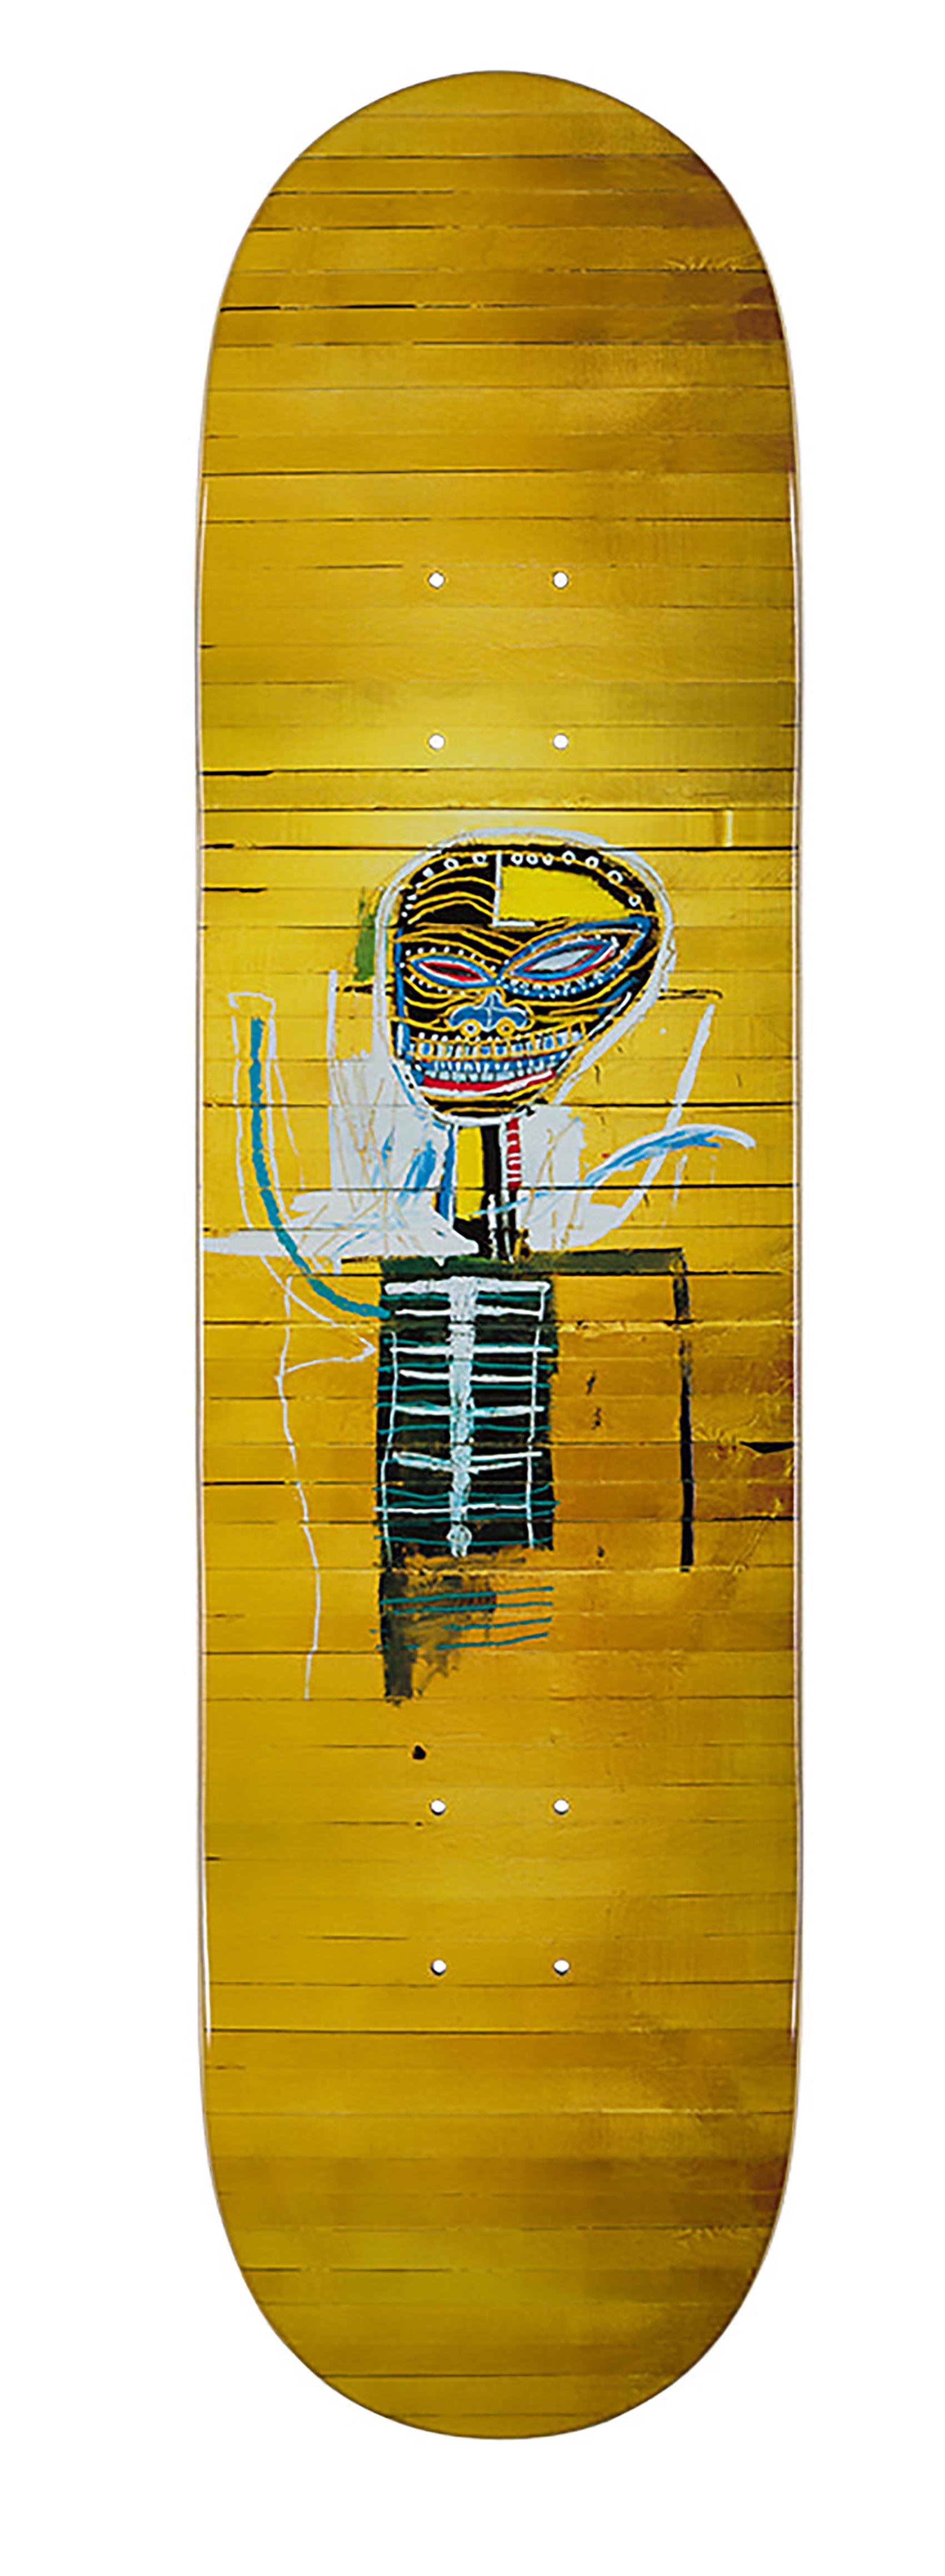 Basquiat Skateboard Decks (set of 6) 1